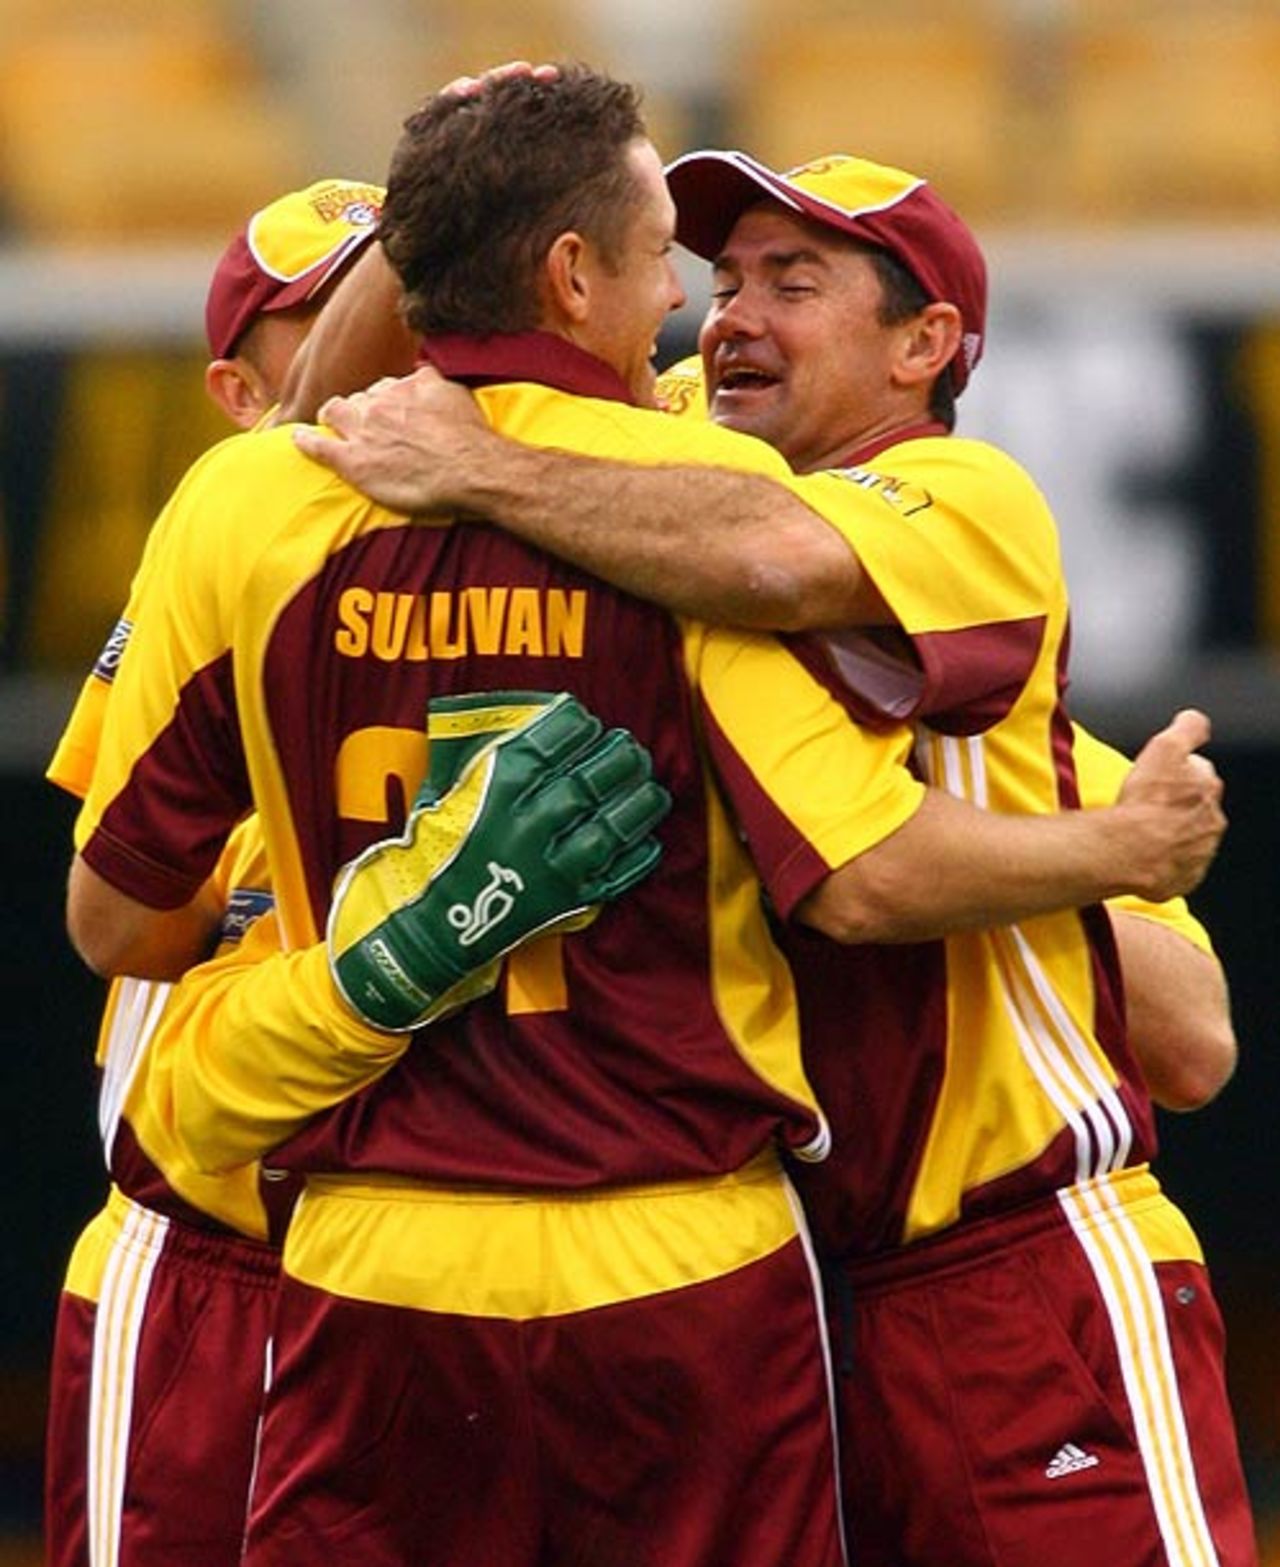 Jimmy Maher and Grant Sullivan celebrate a wicket, Queensland v Tasmania, FR Cup, Brisbane, October 10, 2007